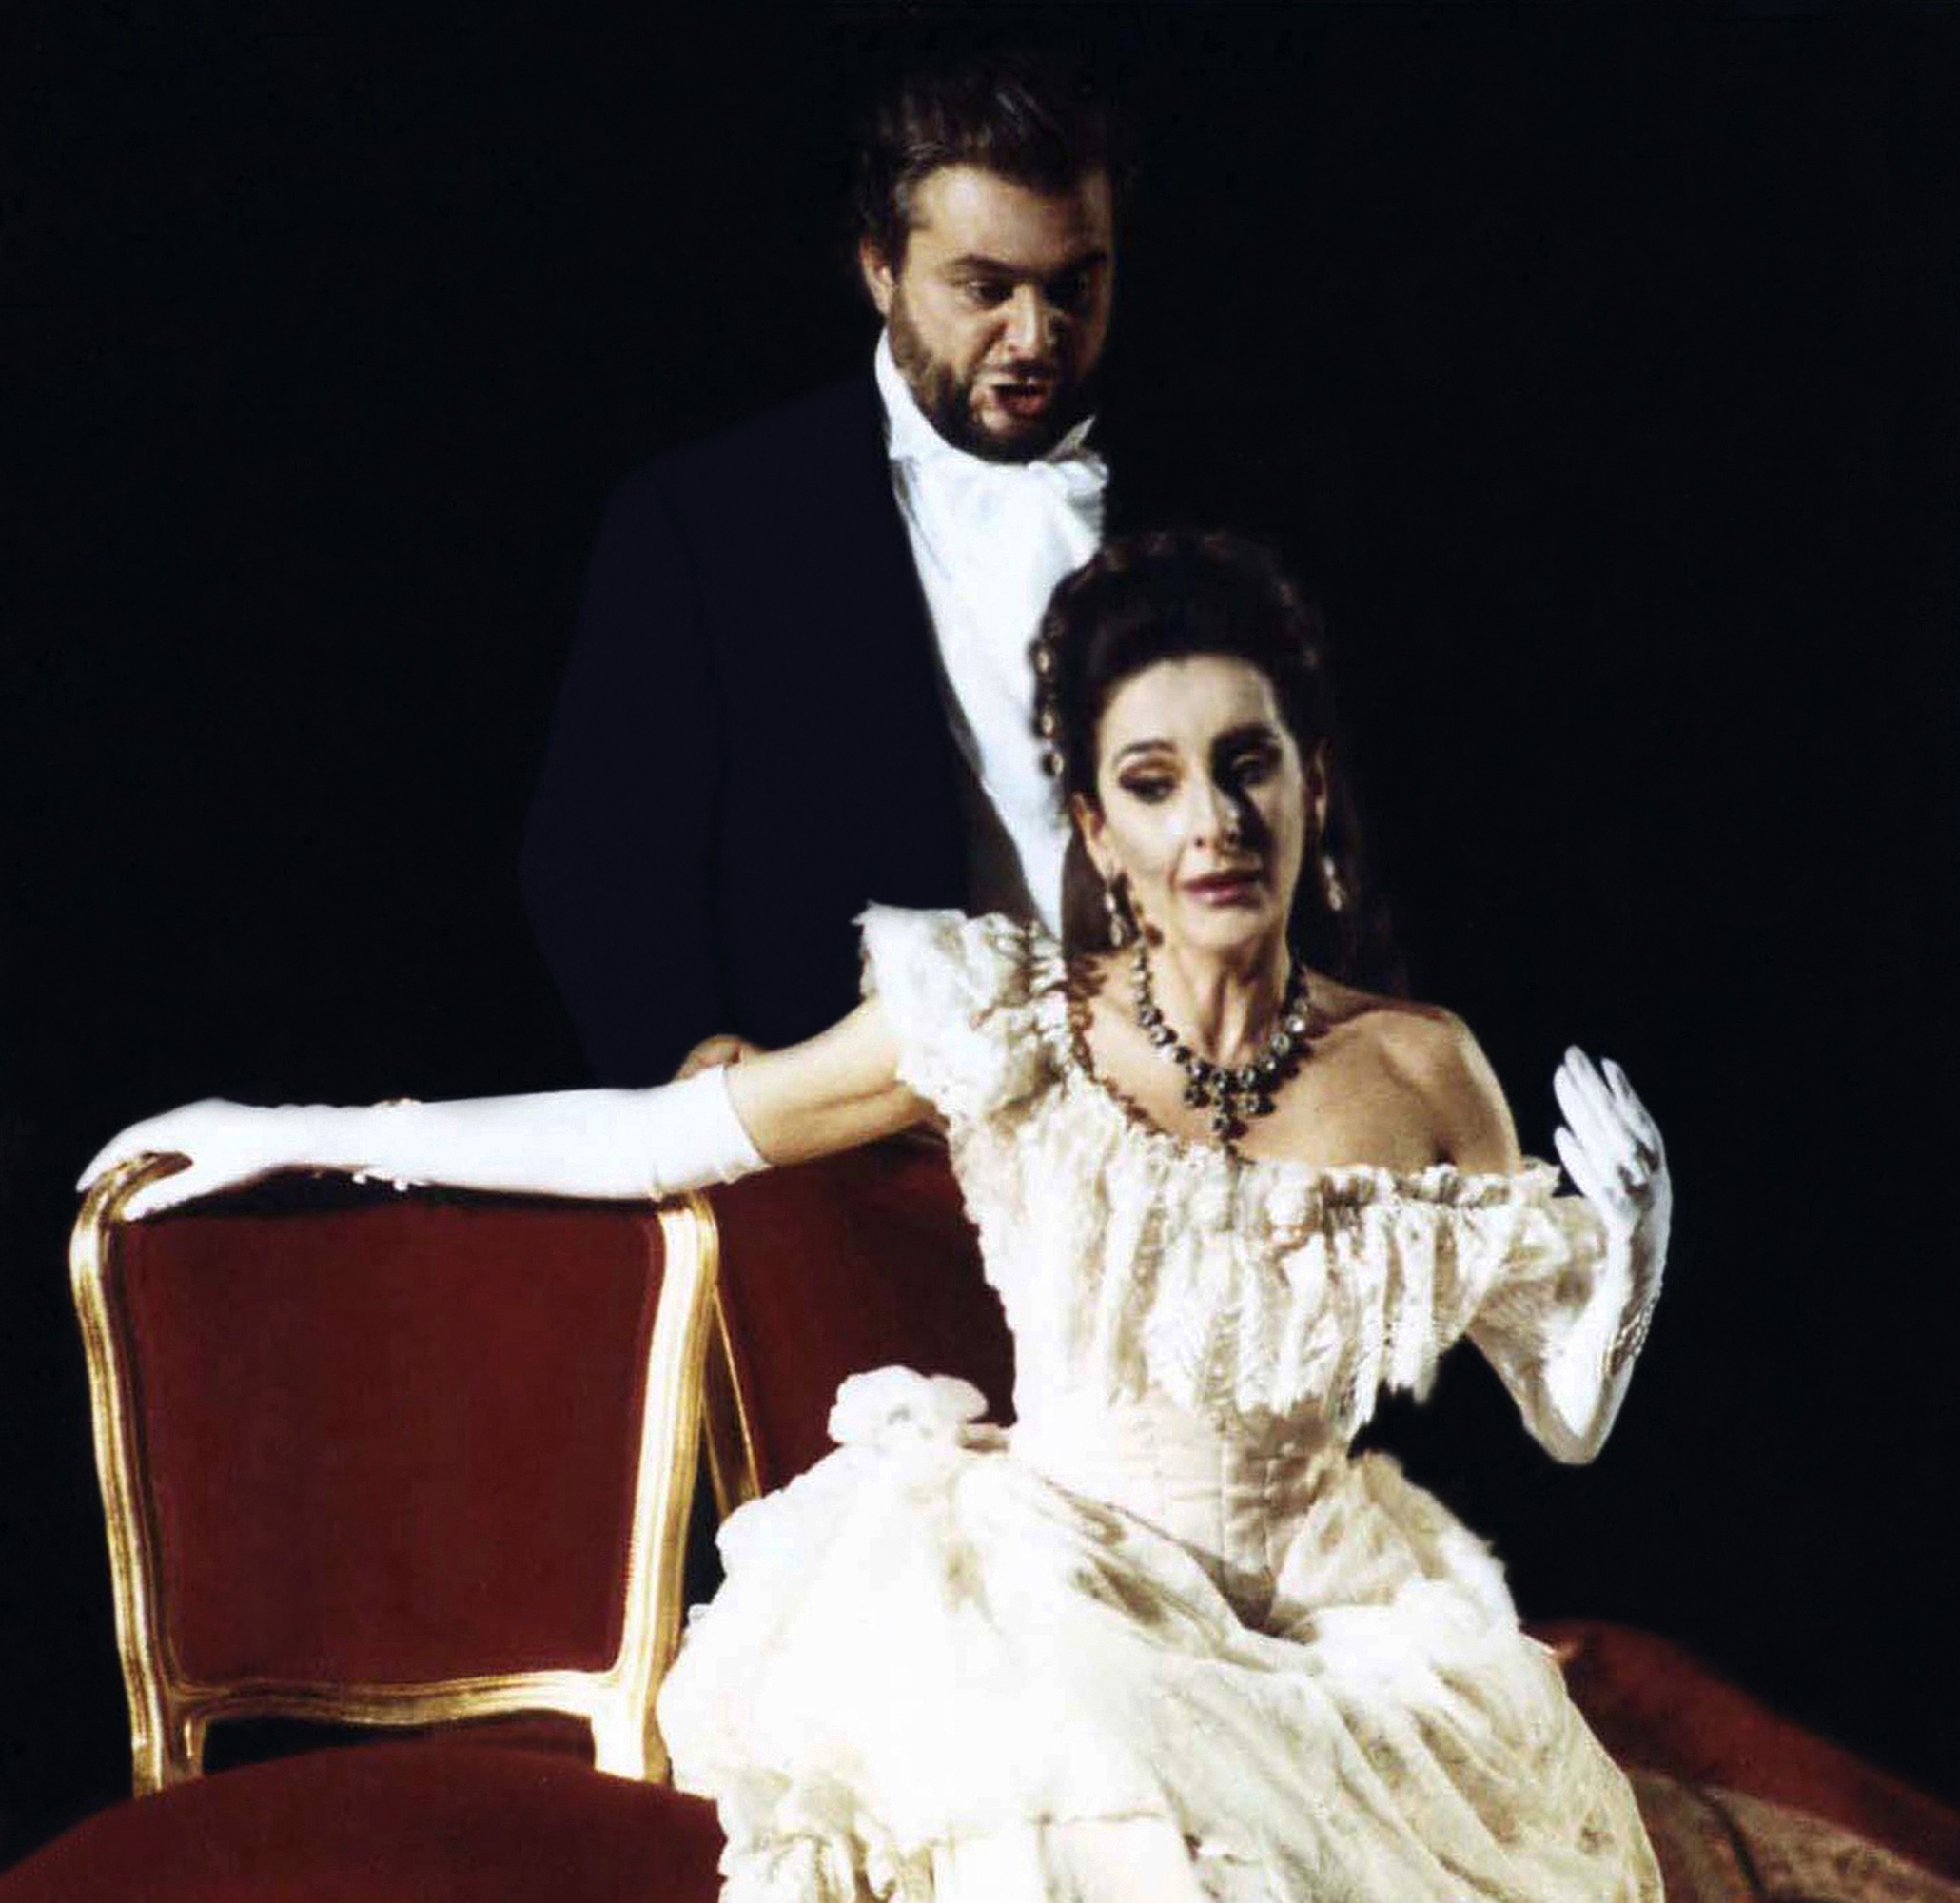 Lucia Aliberti with the French tenor Jean-Luc Viala⚘Rome Opera House"⚘Rome⚘Opera⚘"La Traviata”⚘On Stage⚘Photo taken from the TV News⚘TV Portrait⚘:http://www.luciaaliberti.it #luciaaliberti #jeanlucviala #romeoperahouse #rome #latraviata #opera #onstage #tvnews #tvportrait #henningbrockhaus